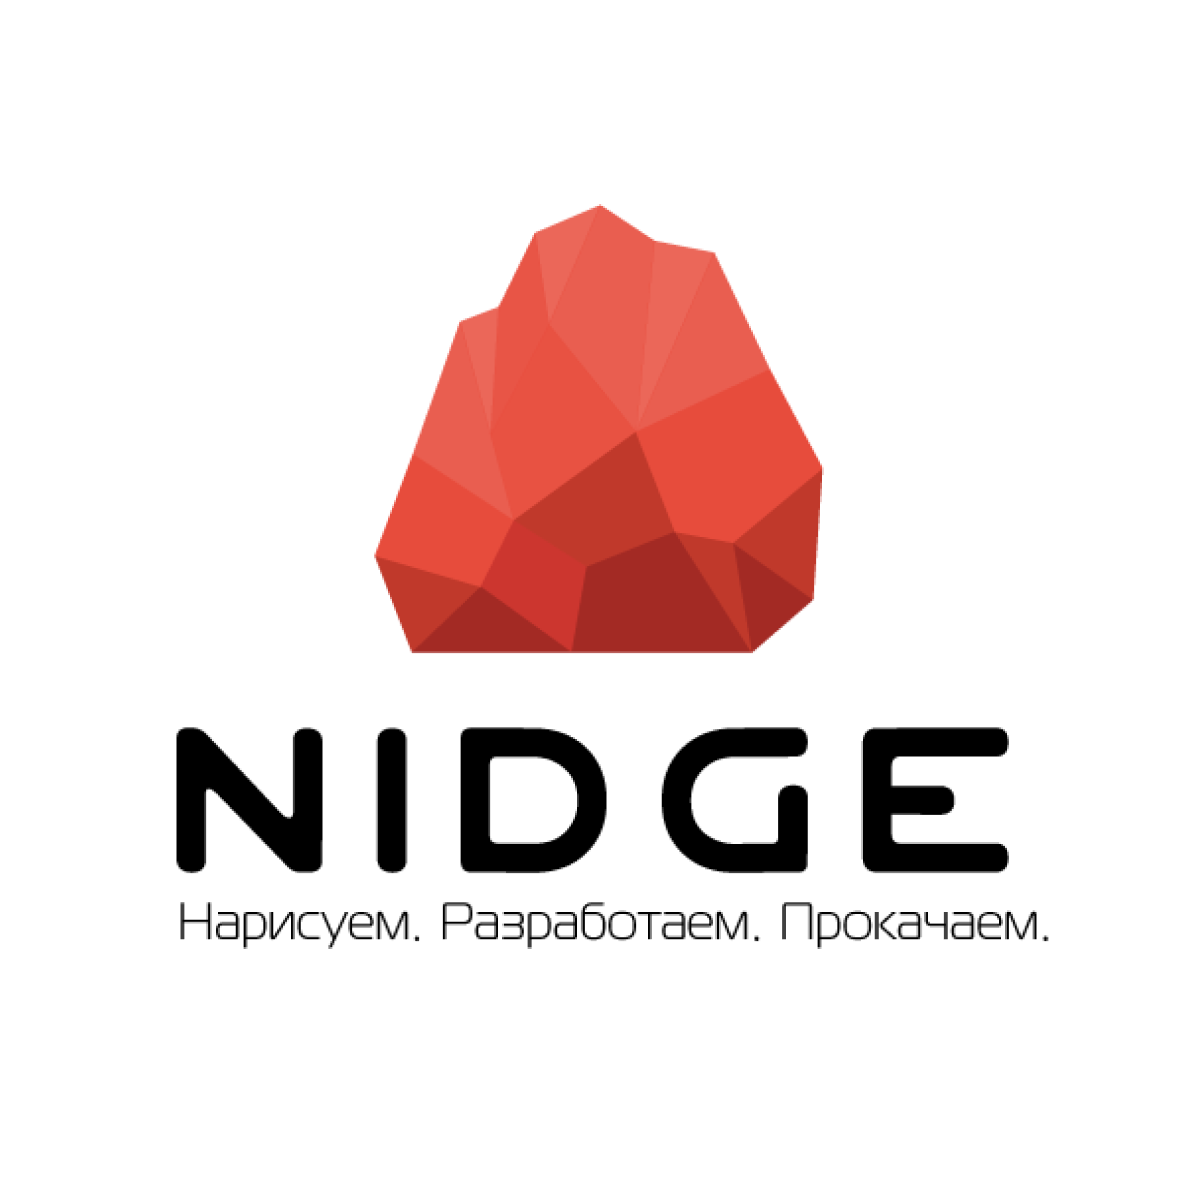 Digital агентство NIDGE